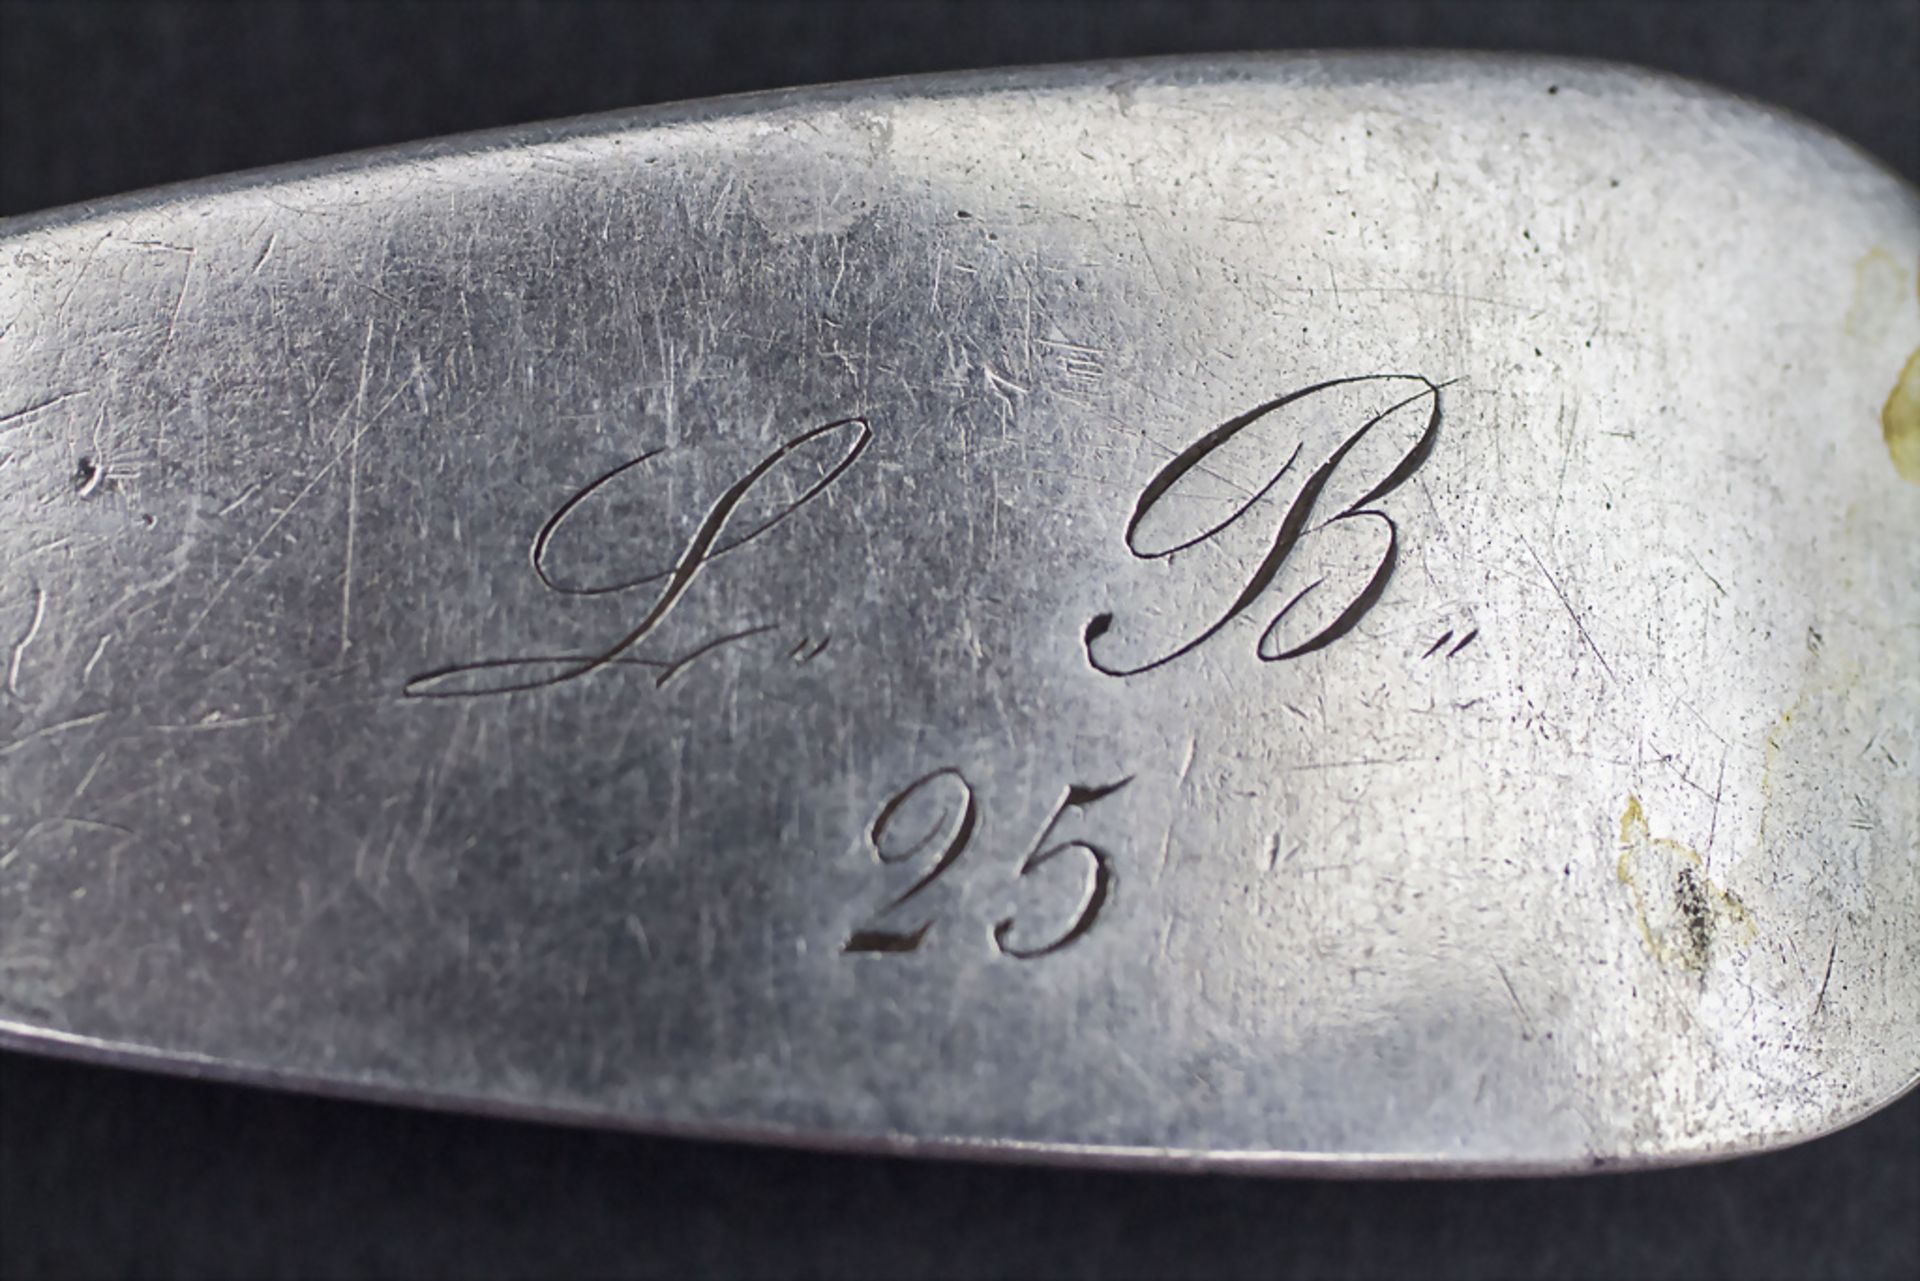 12-tlg. Silberbesteck / A 12-piece set of silver cutlery, Paris, nach 1839 - Image 6 of 7